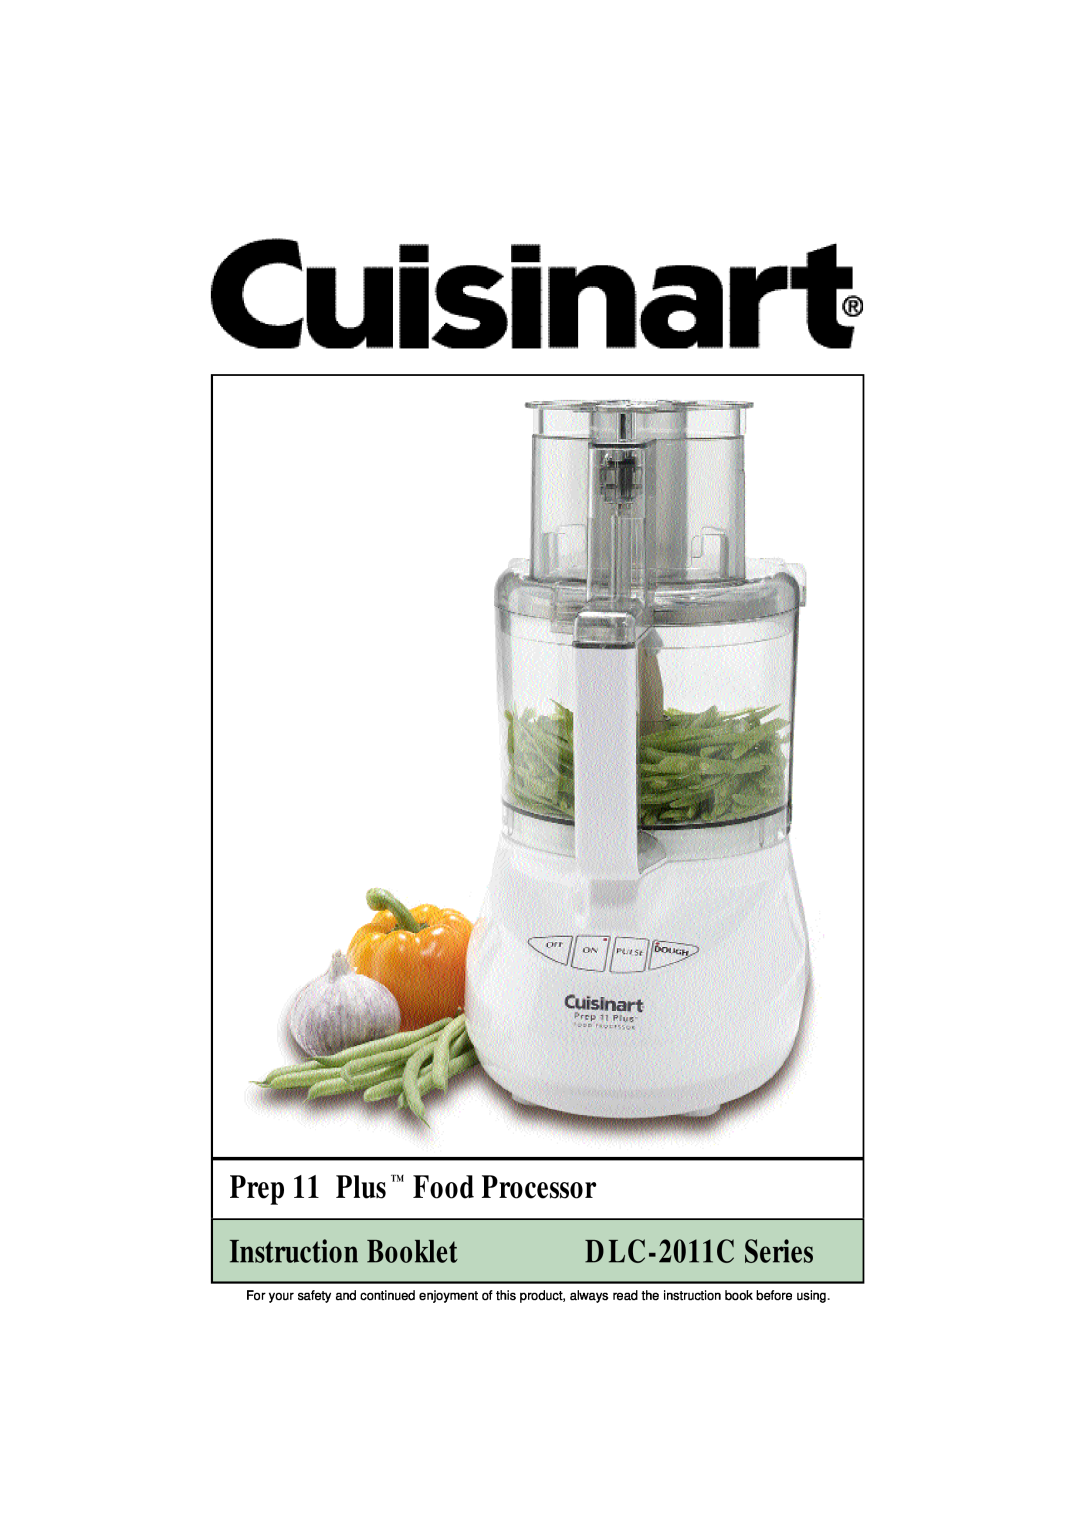 Cuisinart manual Prep 11 Plus Food Processor, Instruction Booklet, DLC-2011C Series 